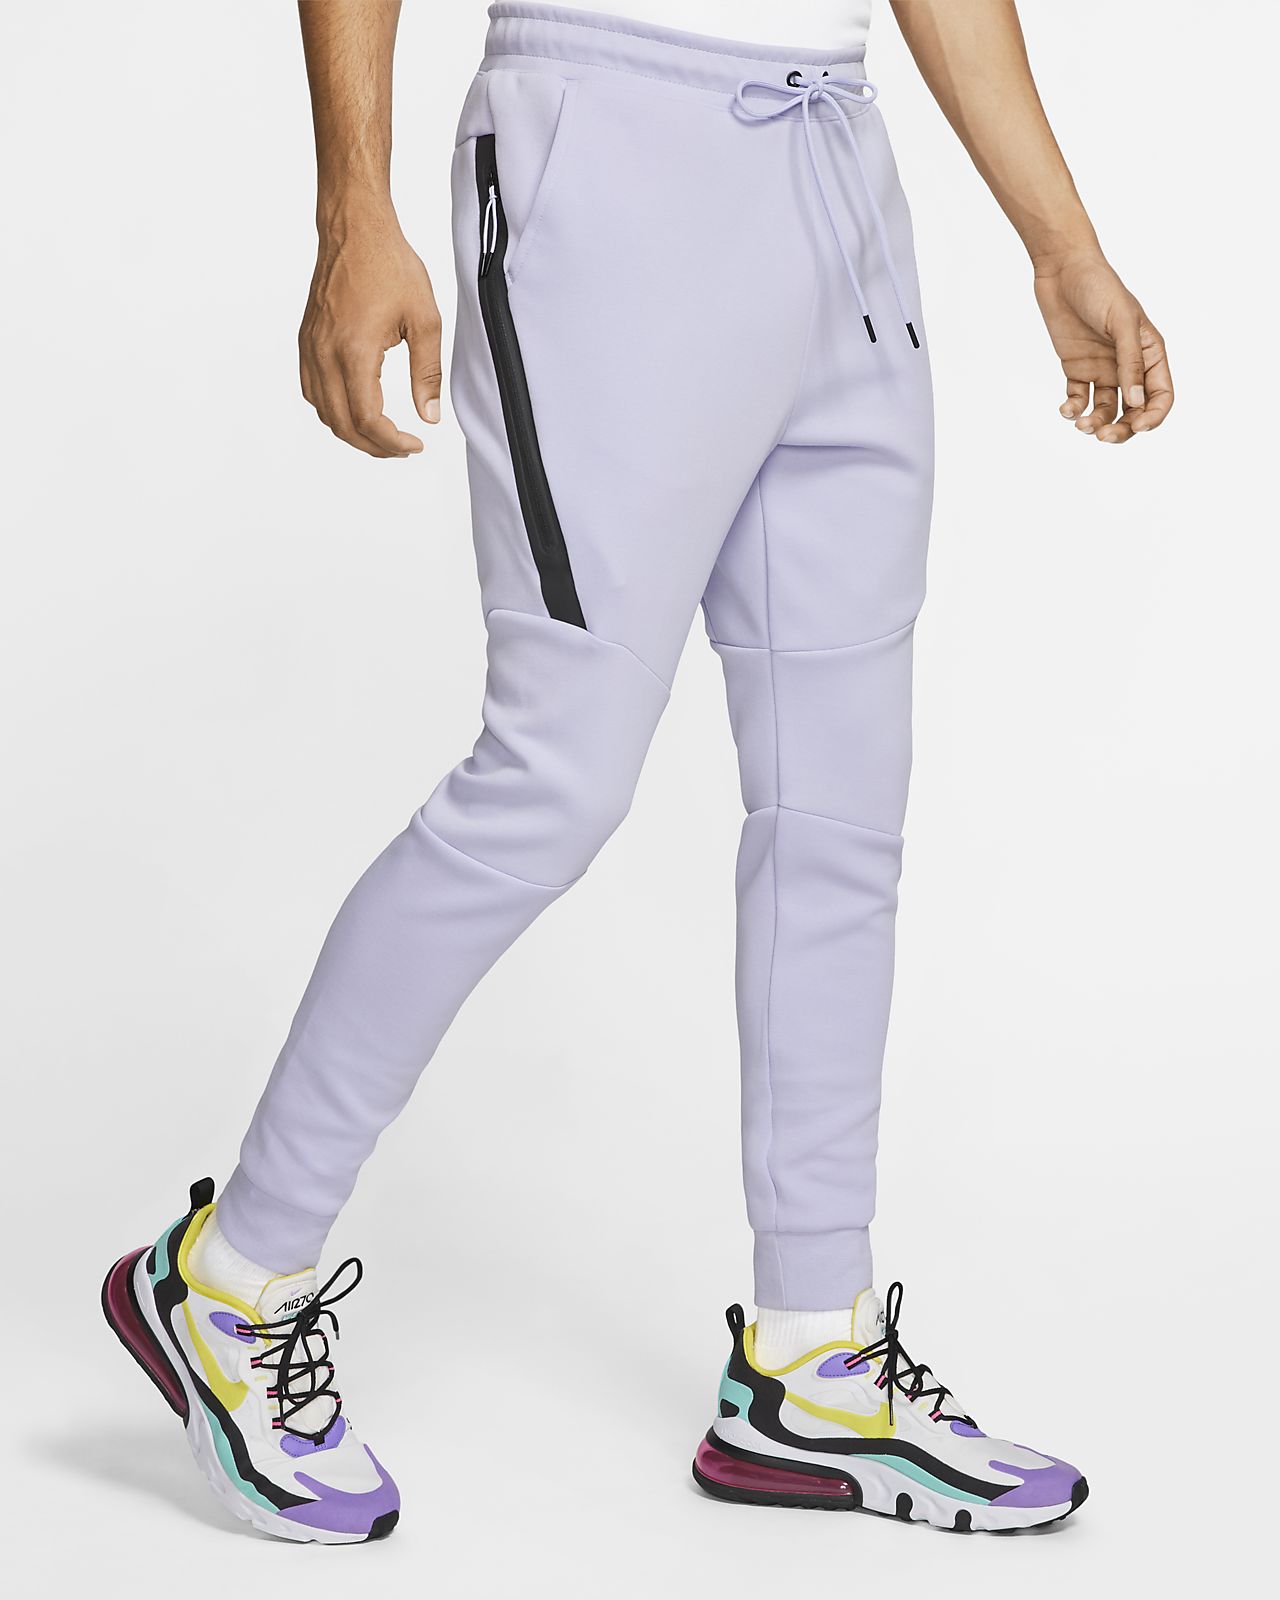 Nike Sweatpants Men S Size Chart